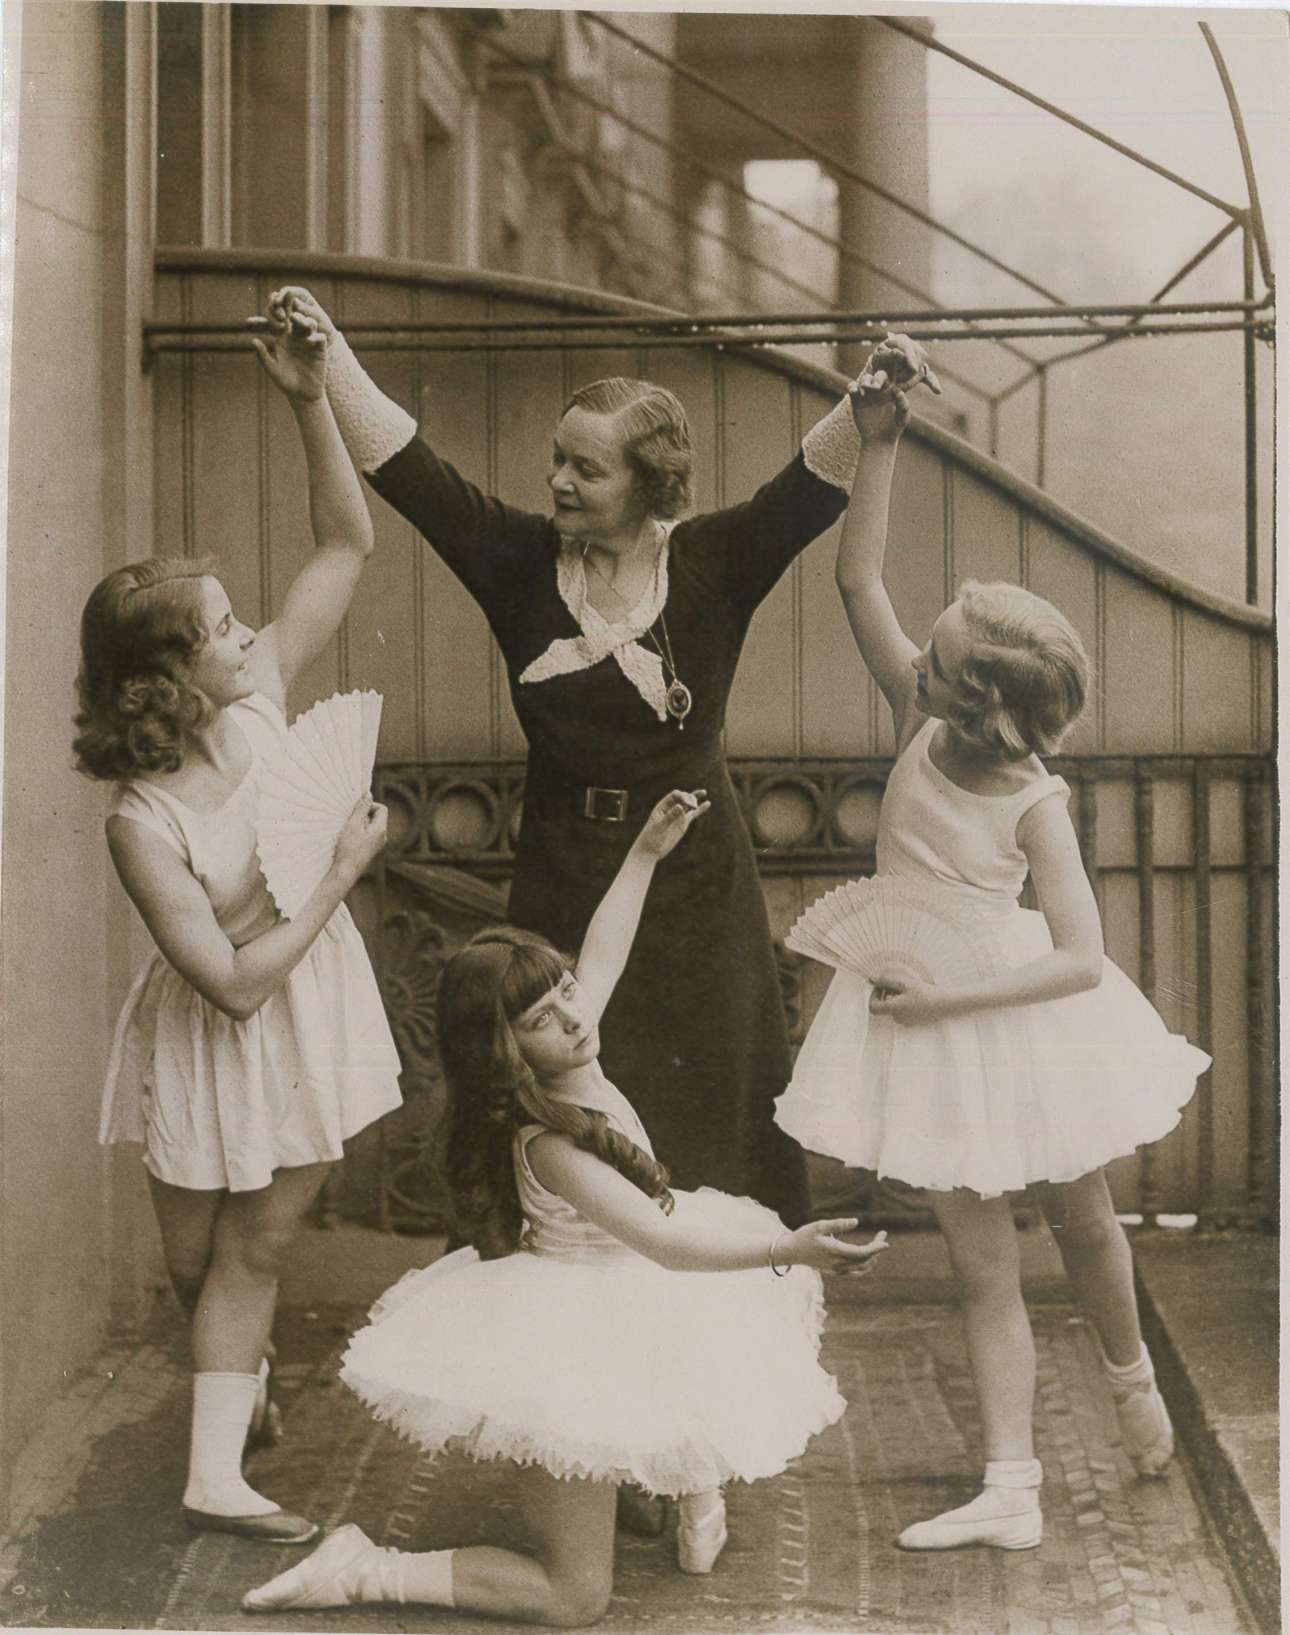 H καταξιωμένη μπαλαρίνα Αντελίν Ζενέ, μαζί με τα νεαρά μέλη του Συλλόγου Οπερατικού Χορού, πριν από πρωινή παράσταση σε θέατρο του Γουέστ Εντ το 1932